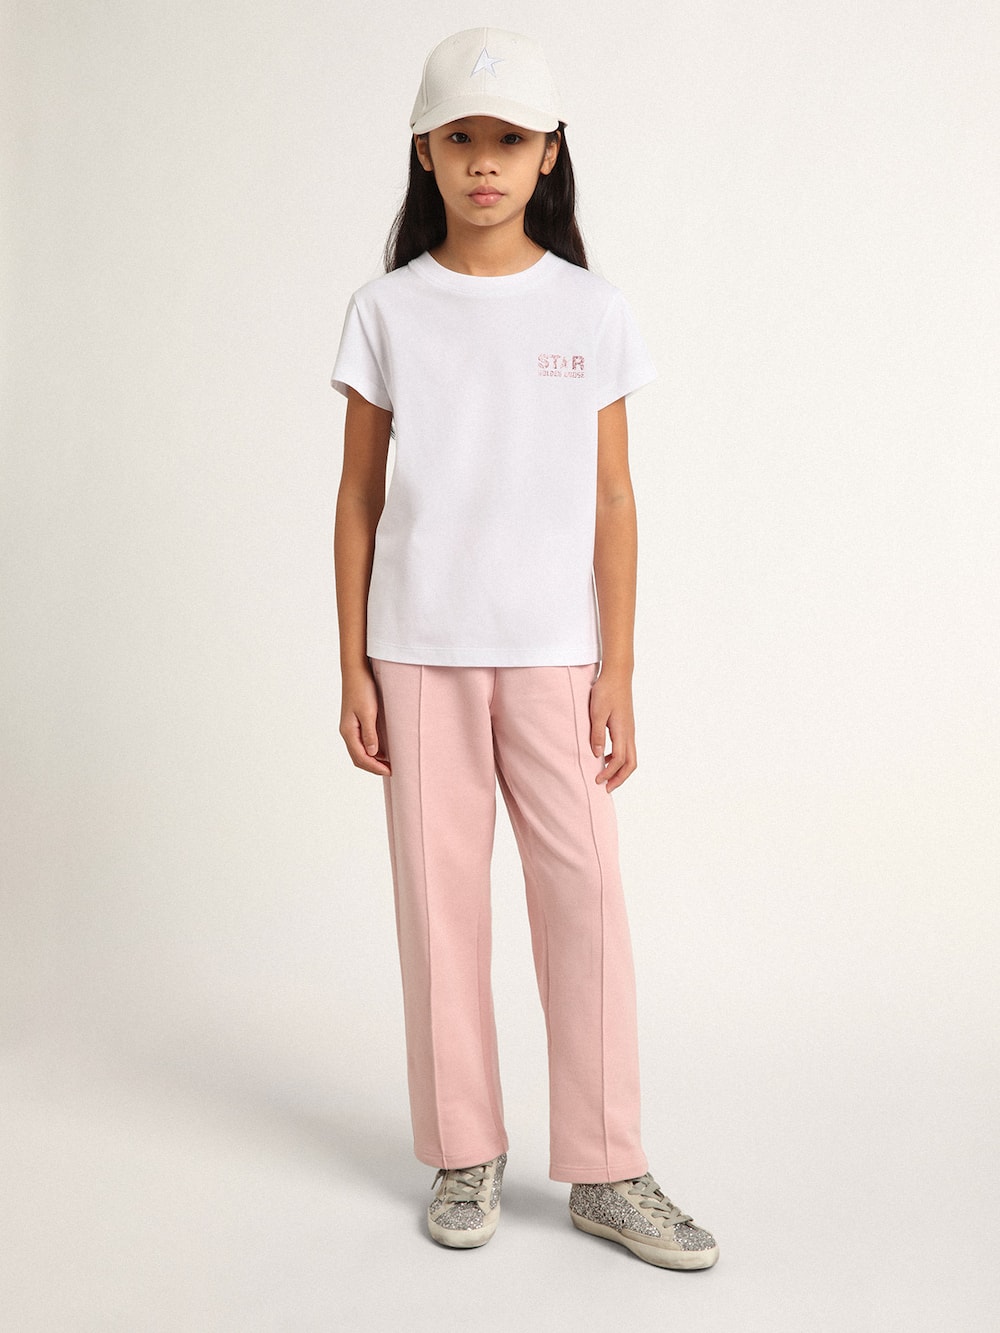 Golden Goose - Camiseta infantil feminina branca com logo e maxi estrela de glitter rosa in 